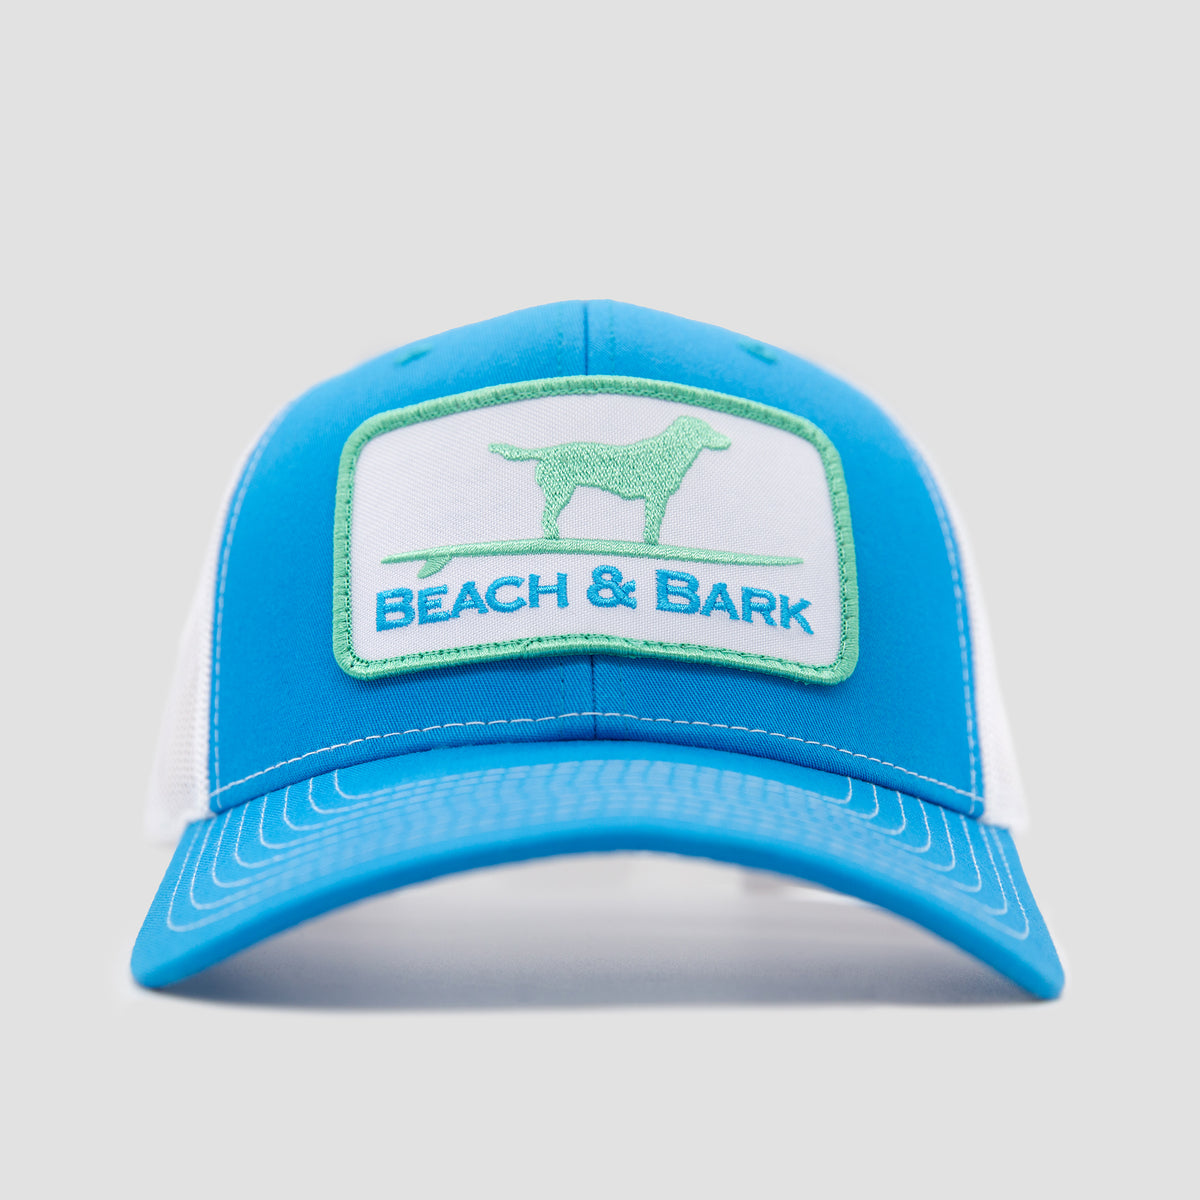 Beach &amp; Bark Snapback Hat